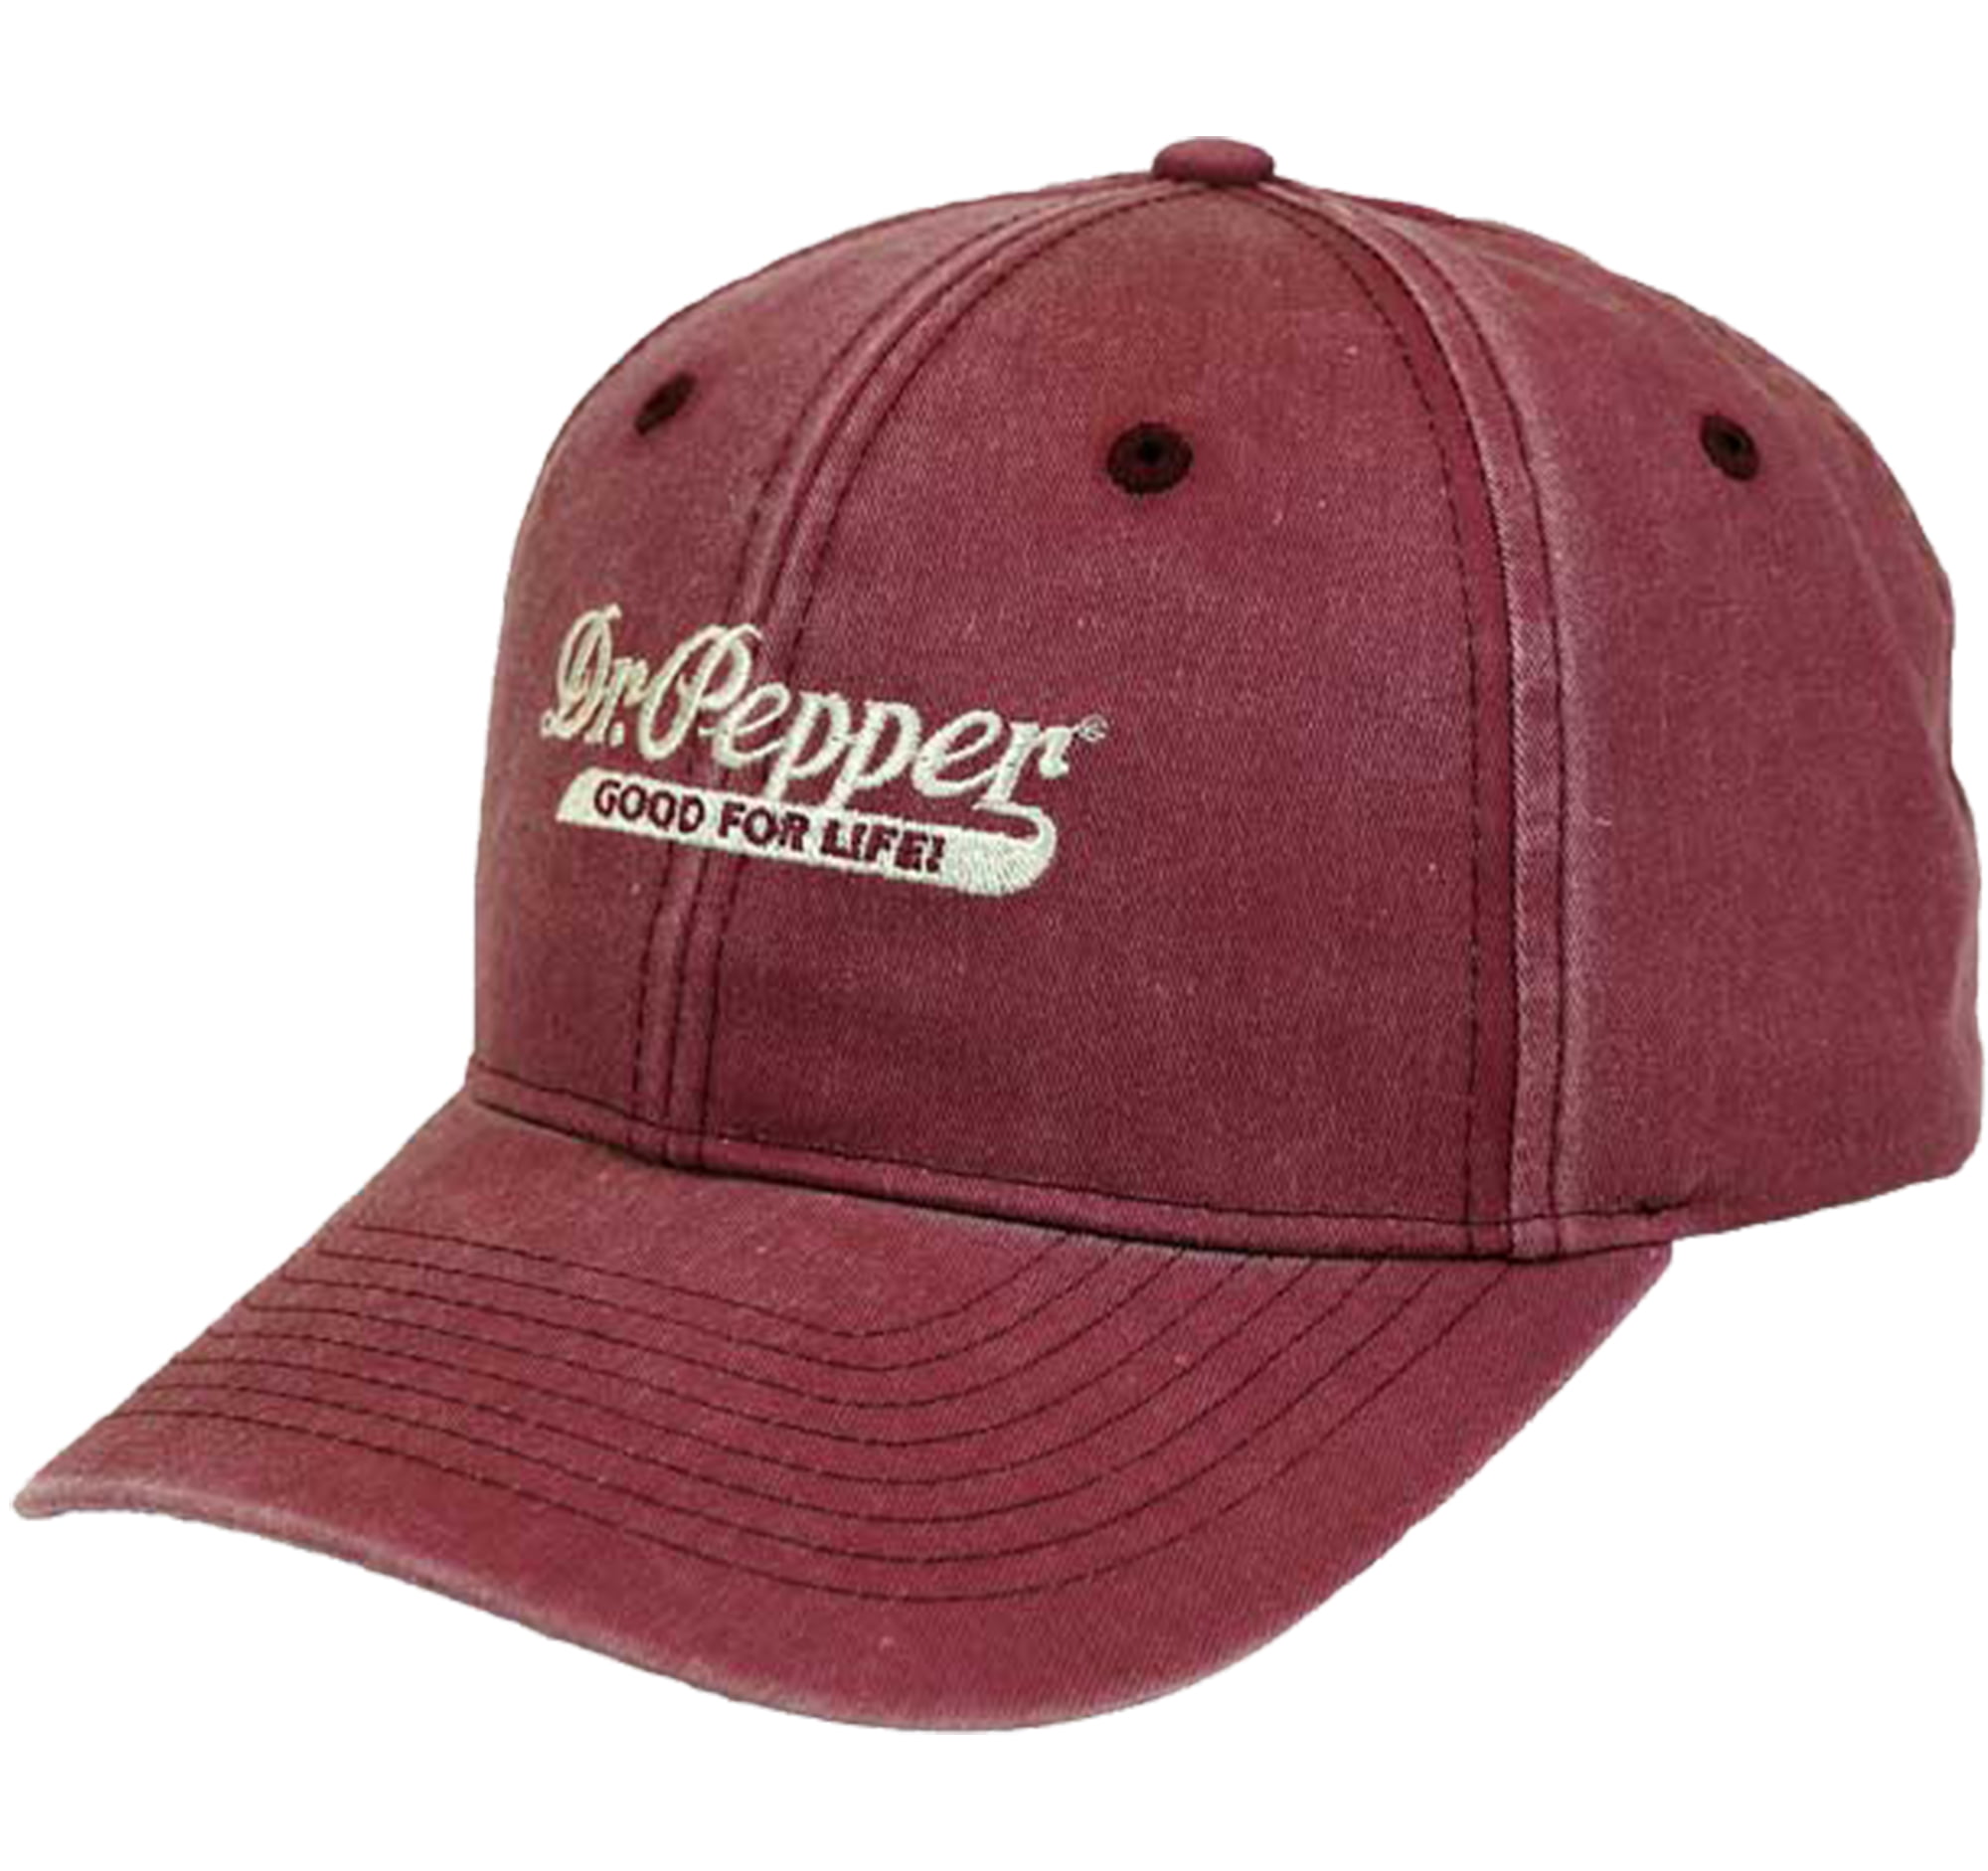 H3 Sportgear Dr. Pepper Strapback Hat - Walmart.com